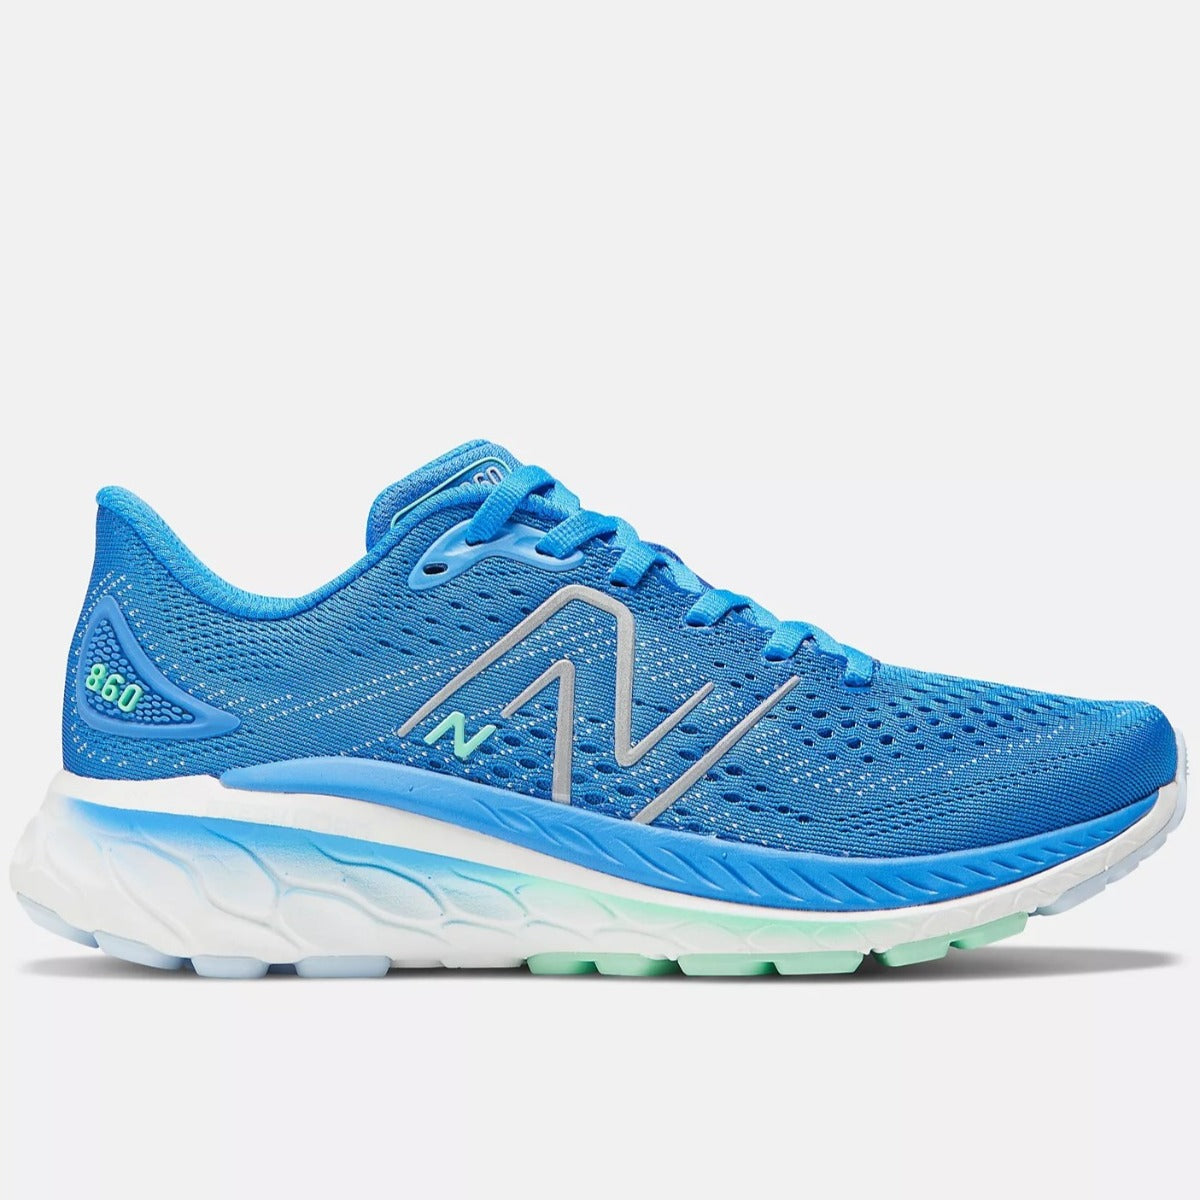 New Balance 860 V13 Running Shoes Women's (Bright Lapis Bright Mint)